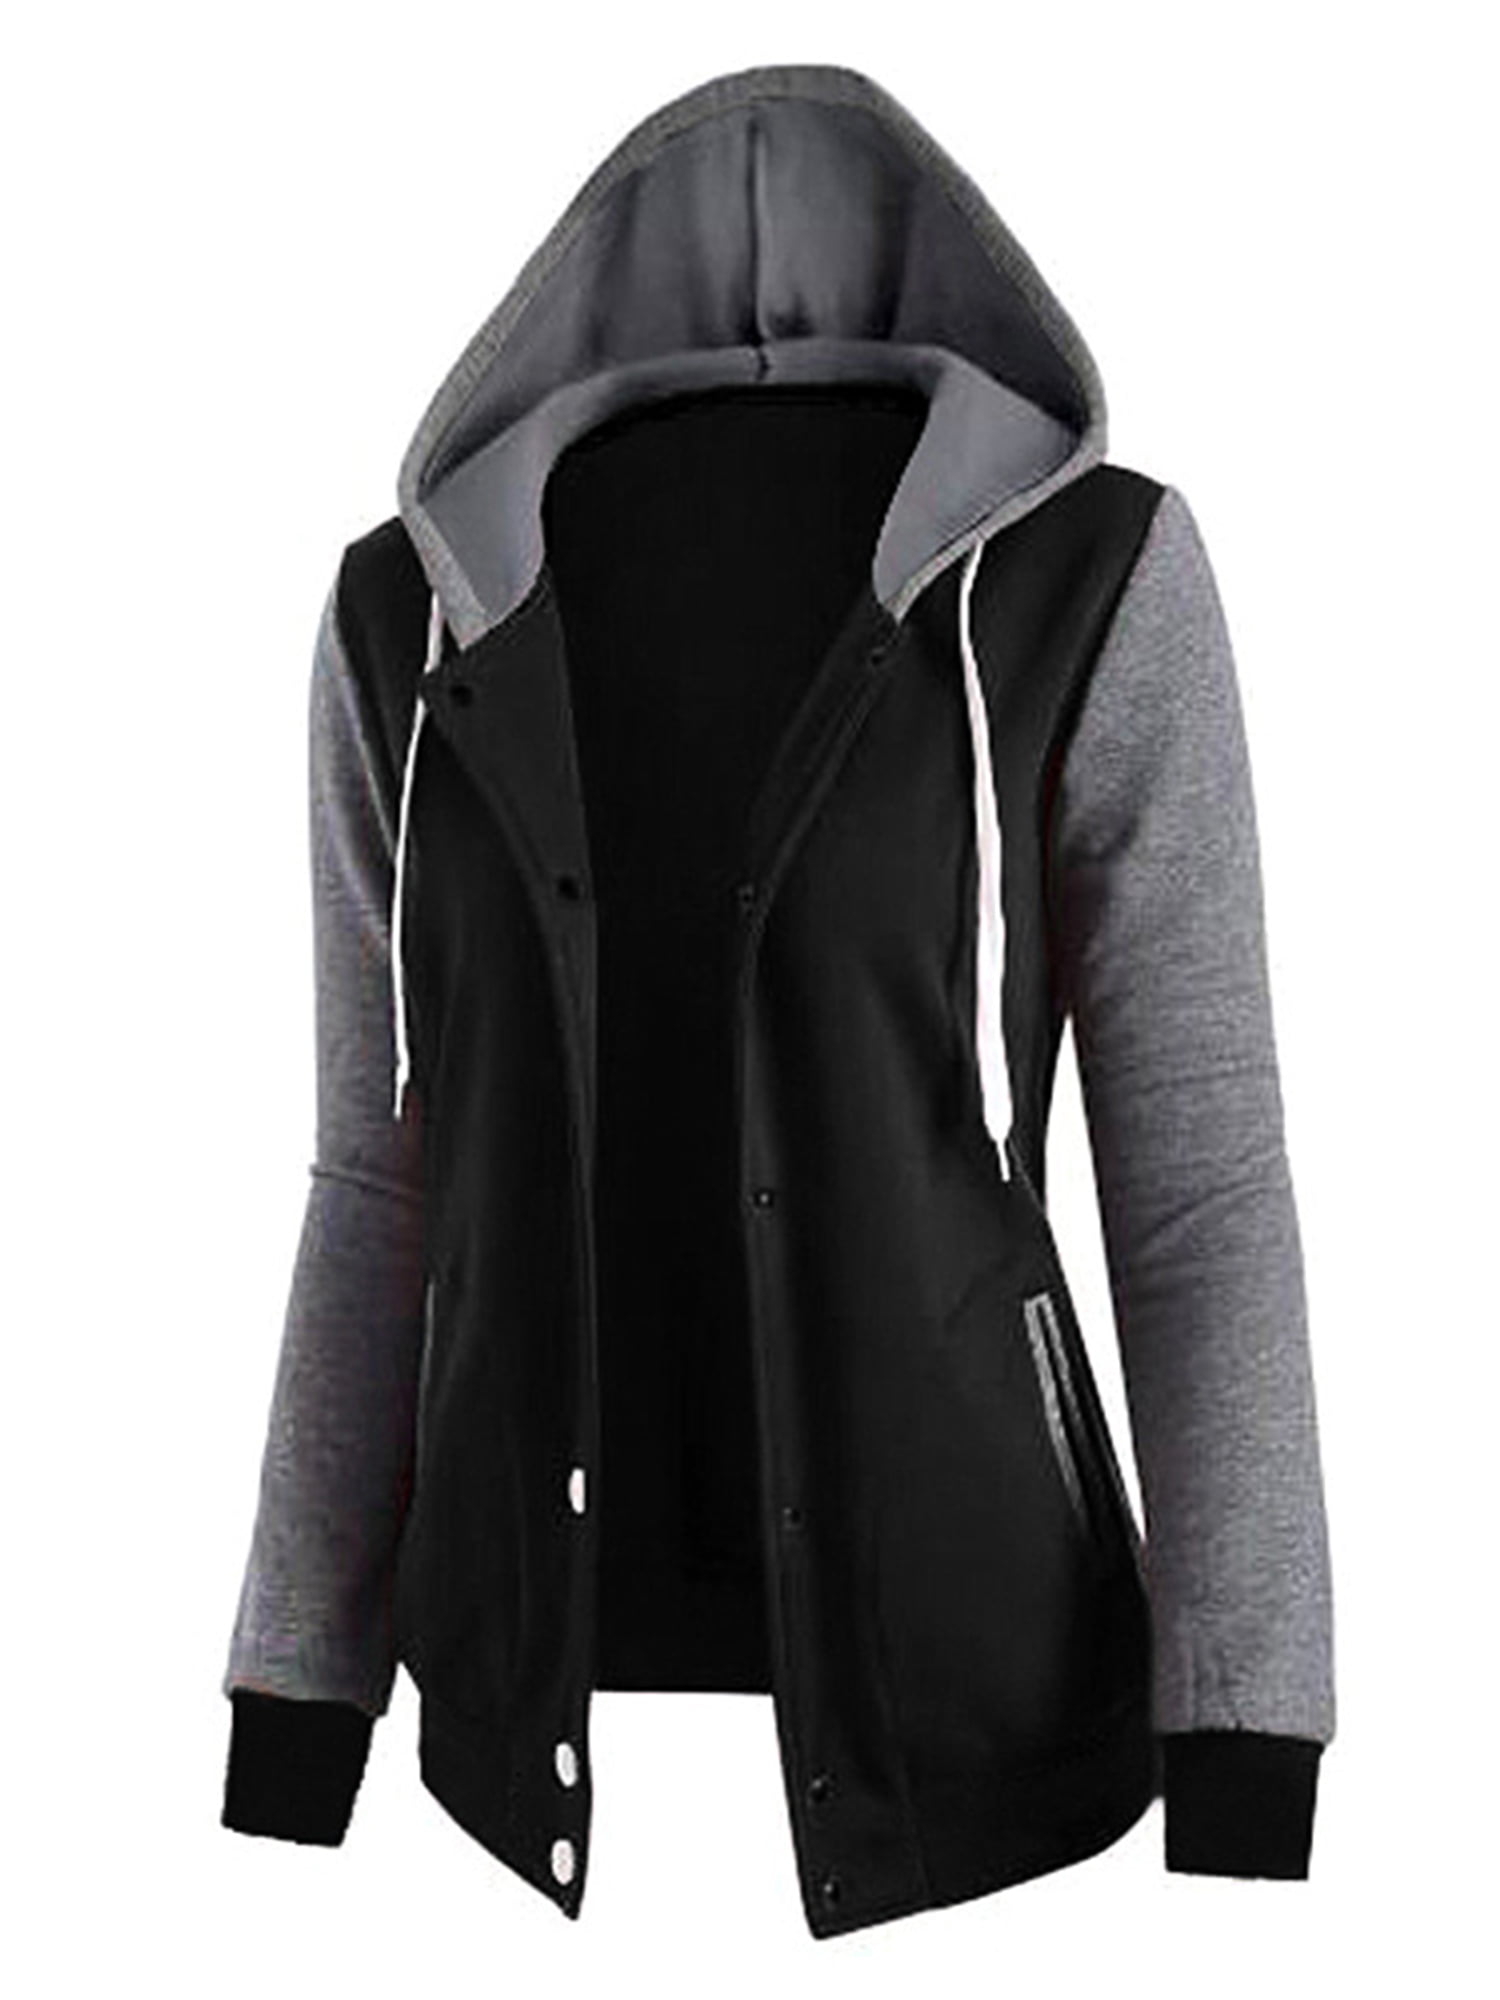 FL&JACK PU Leather Full Sleeve Hooded Jacket Womens Coats 